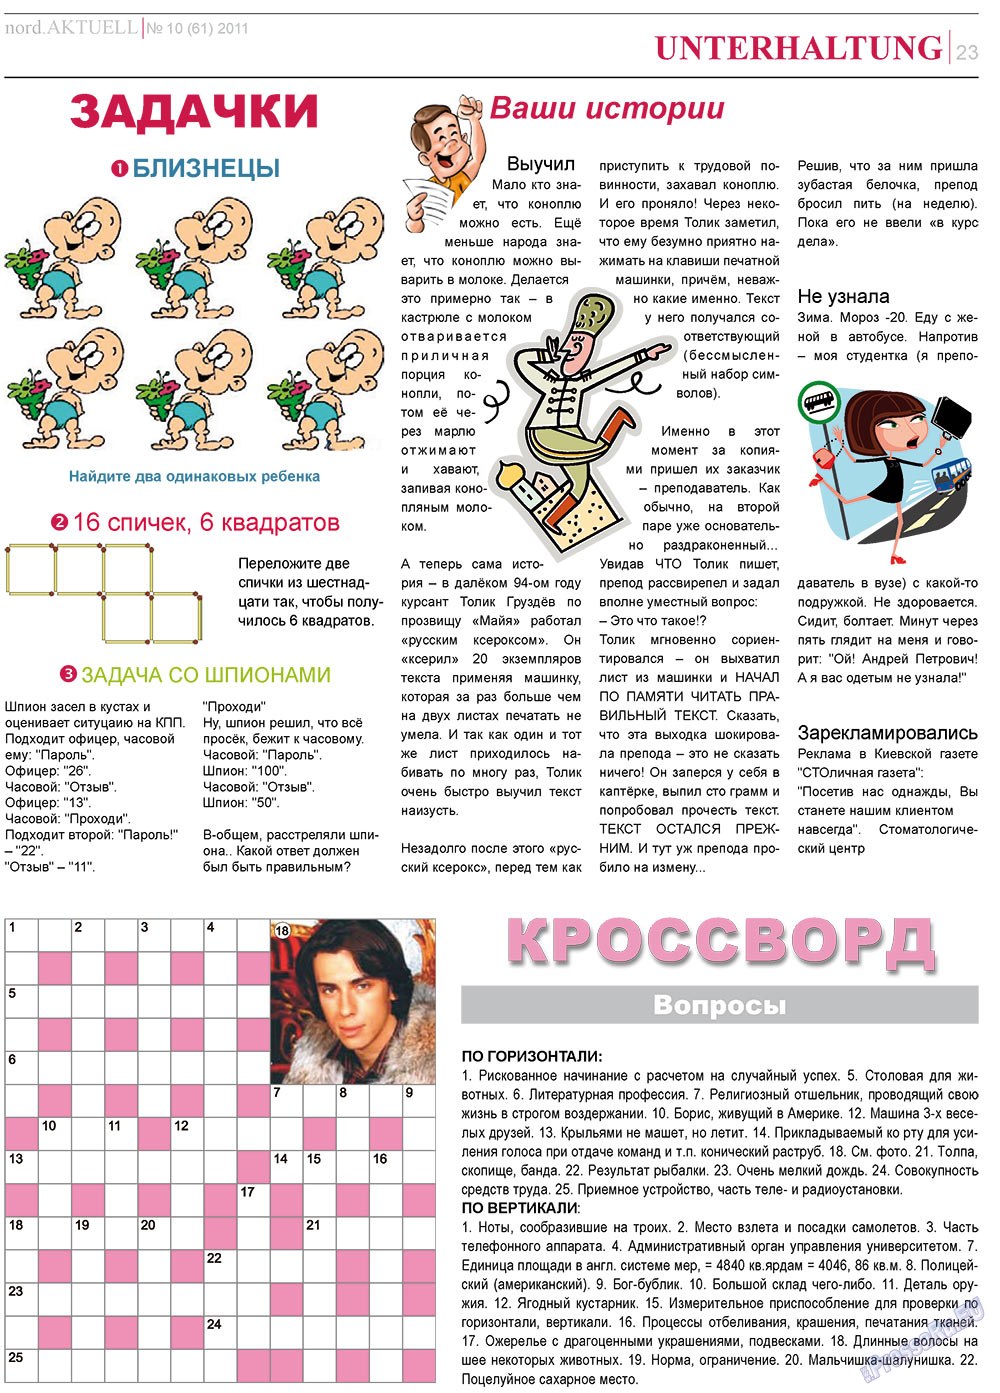 nord.Aktuell, газета. 2011 №10 стр.23